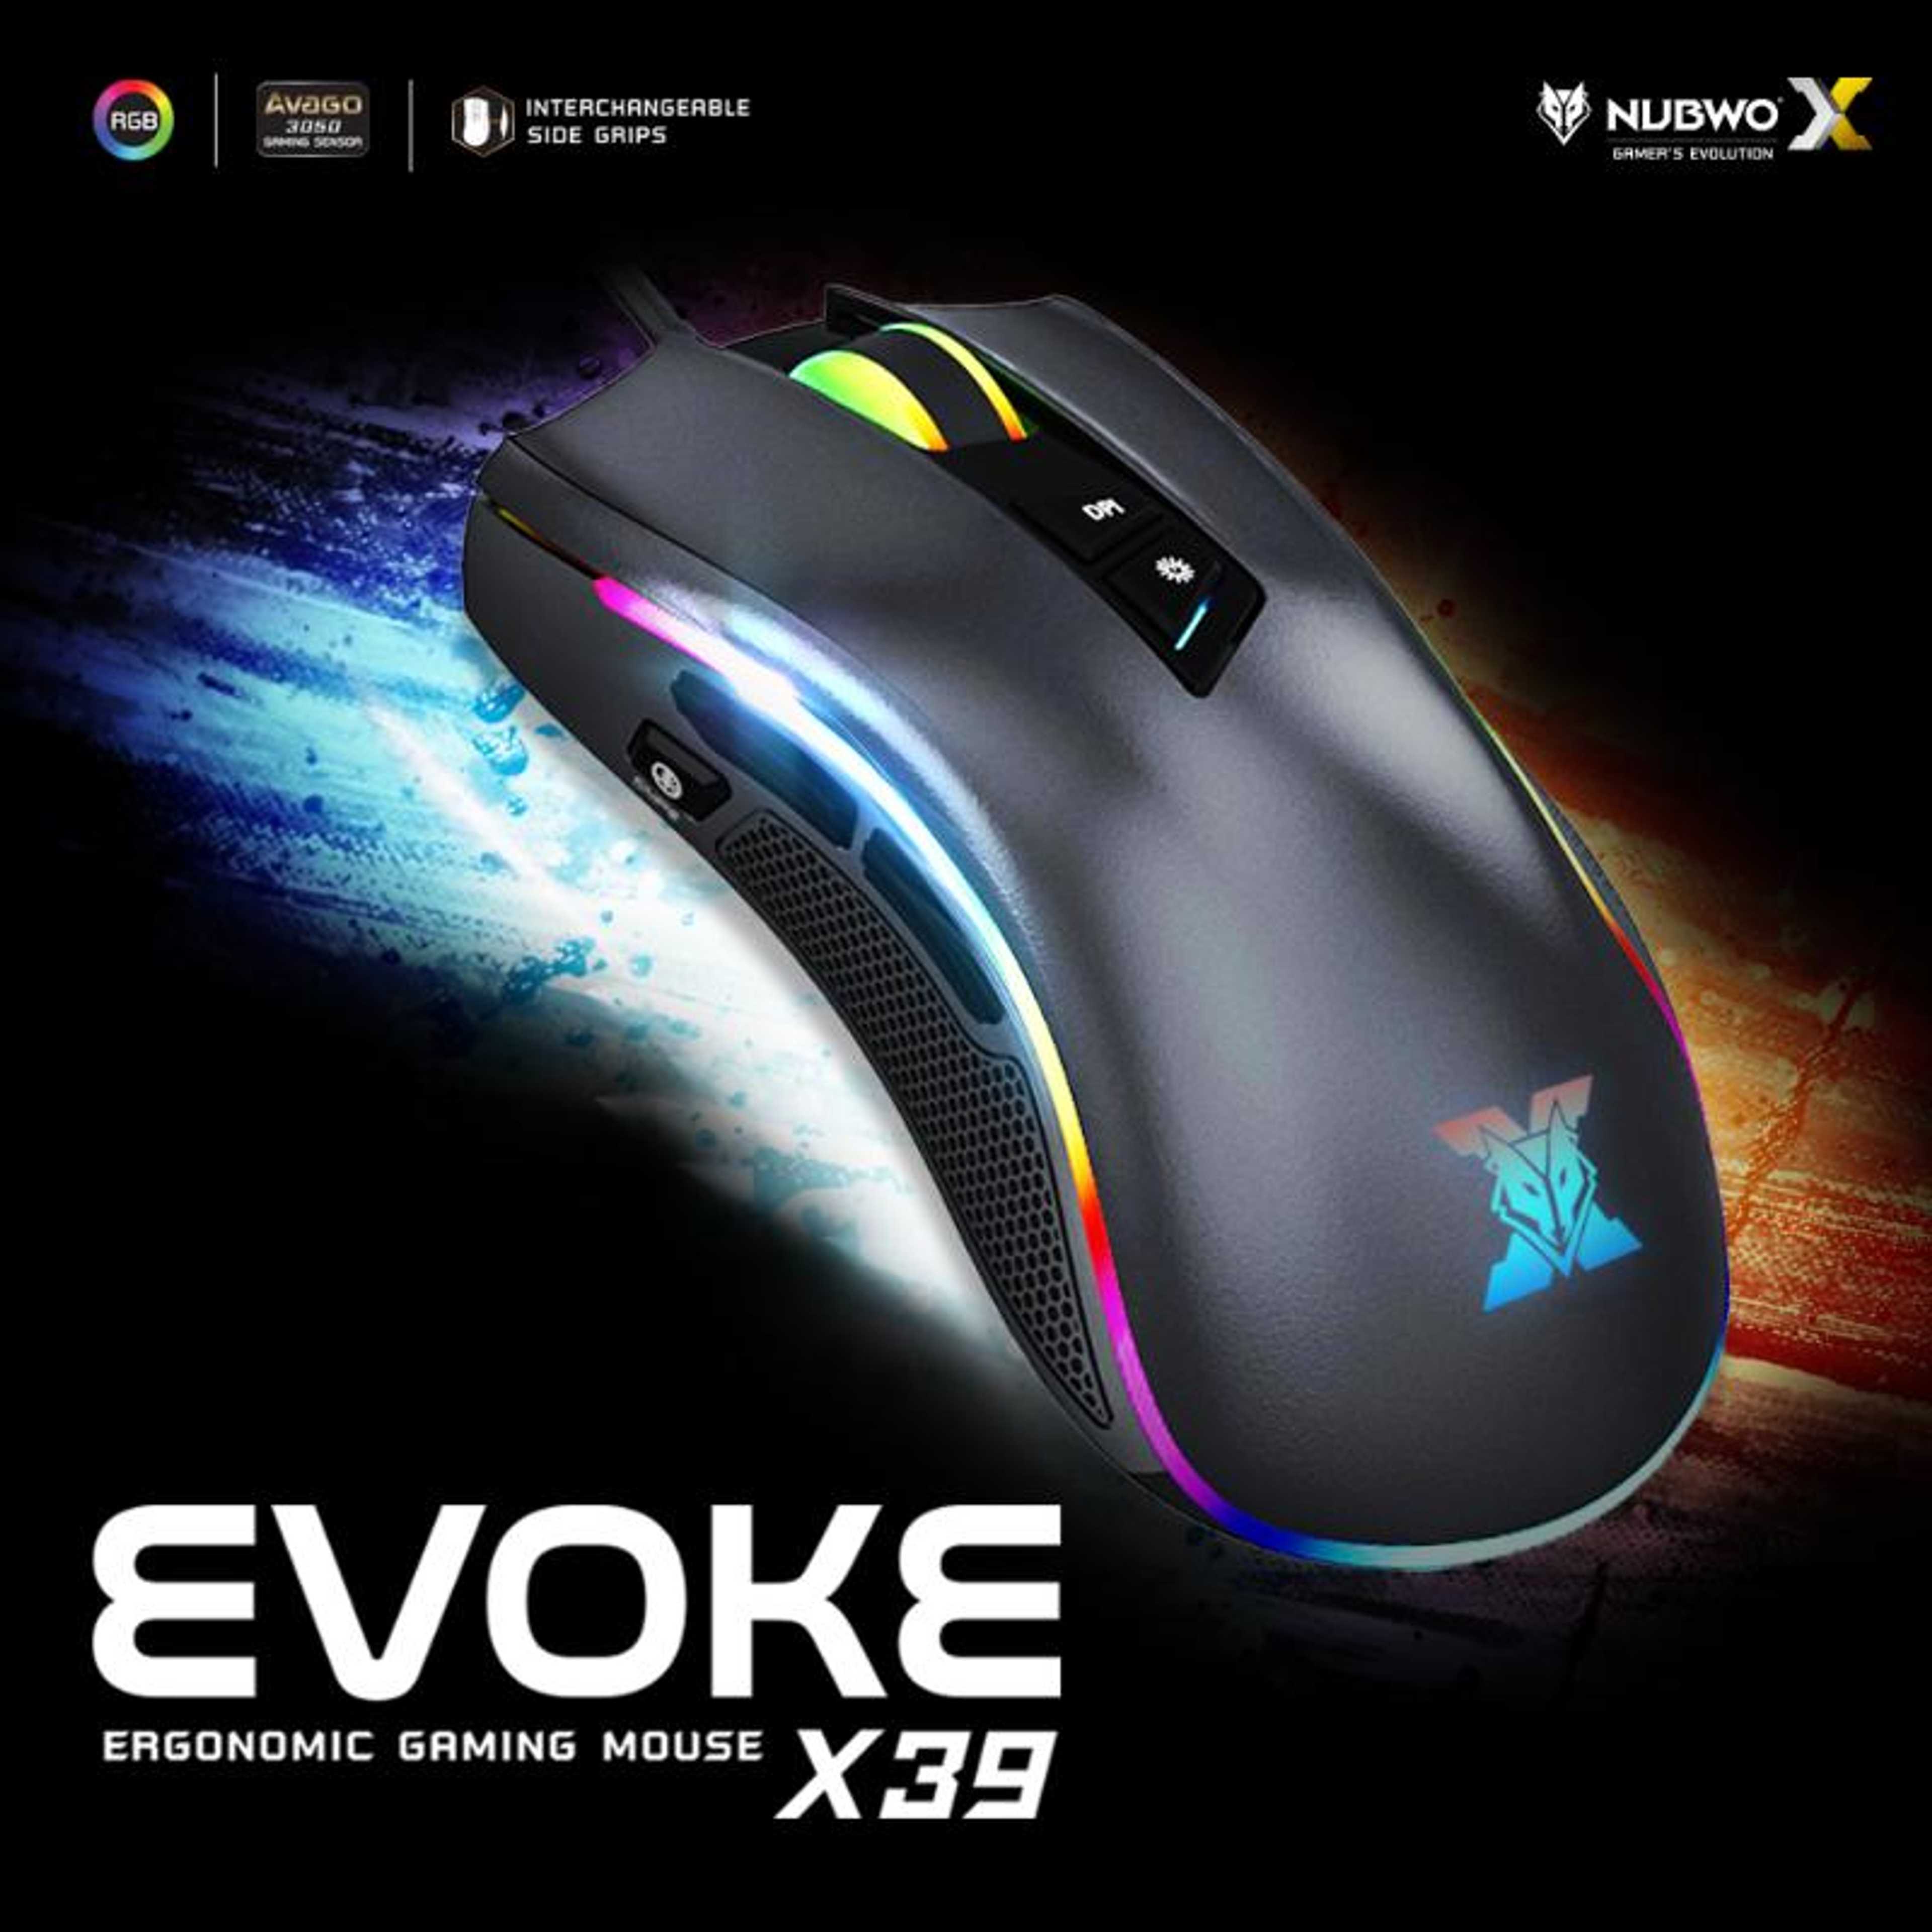 NUBWO X39 EVOKE Ergonomic Gaming Mouse-Avago 3050 Sensor-4000 DPI-1000hz Polling rate-Software Customization